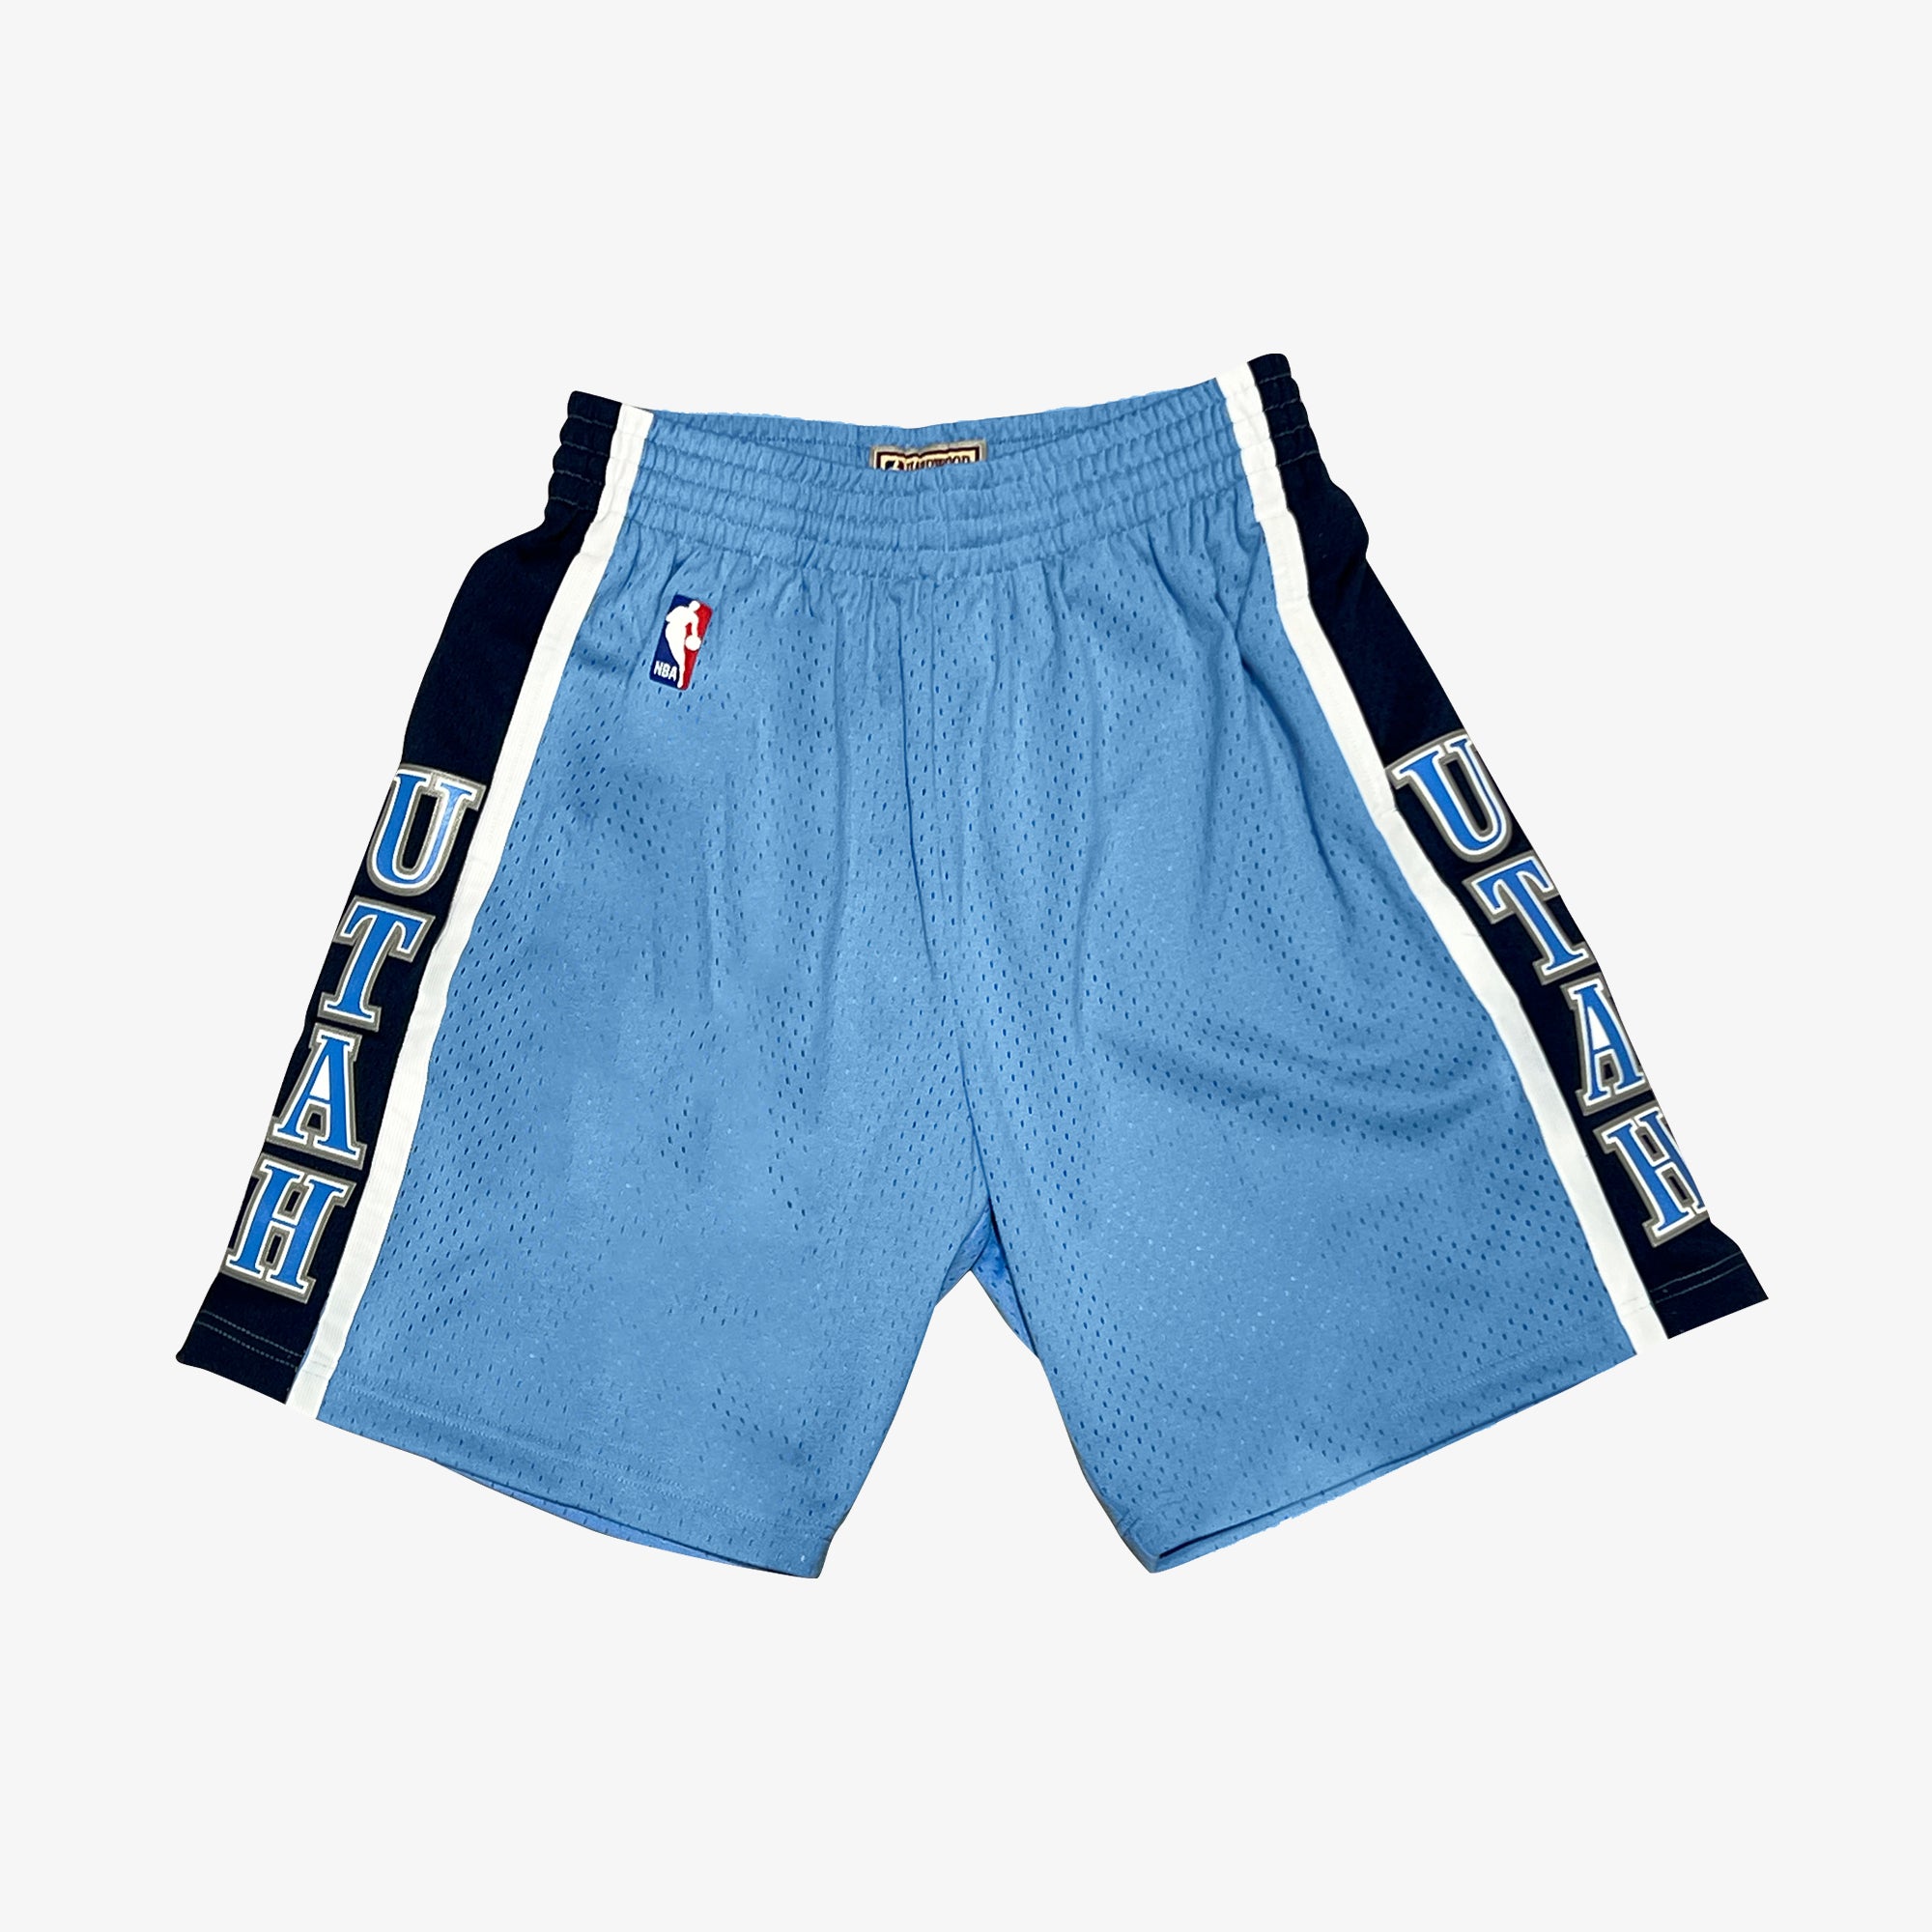 Utah Jazz Retro Shorts